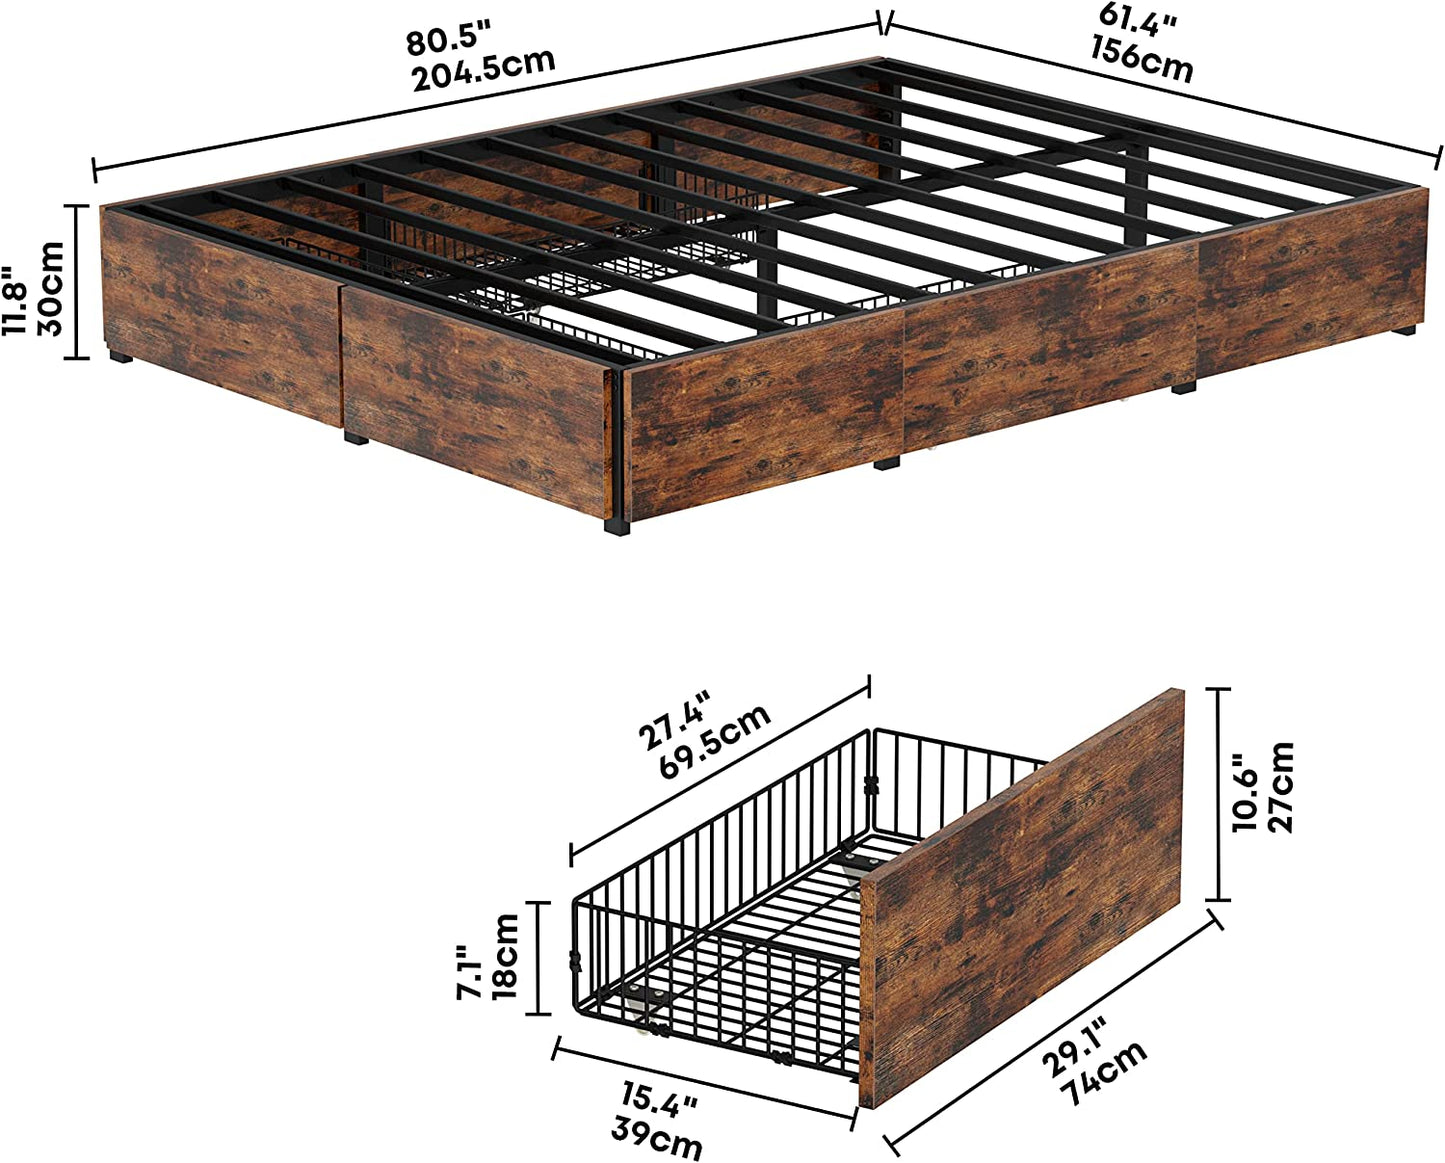 [SALE $150] 4 Drawers Storage Platform Queen Bed Frame